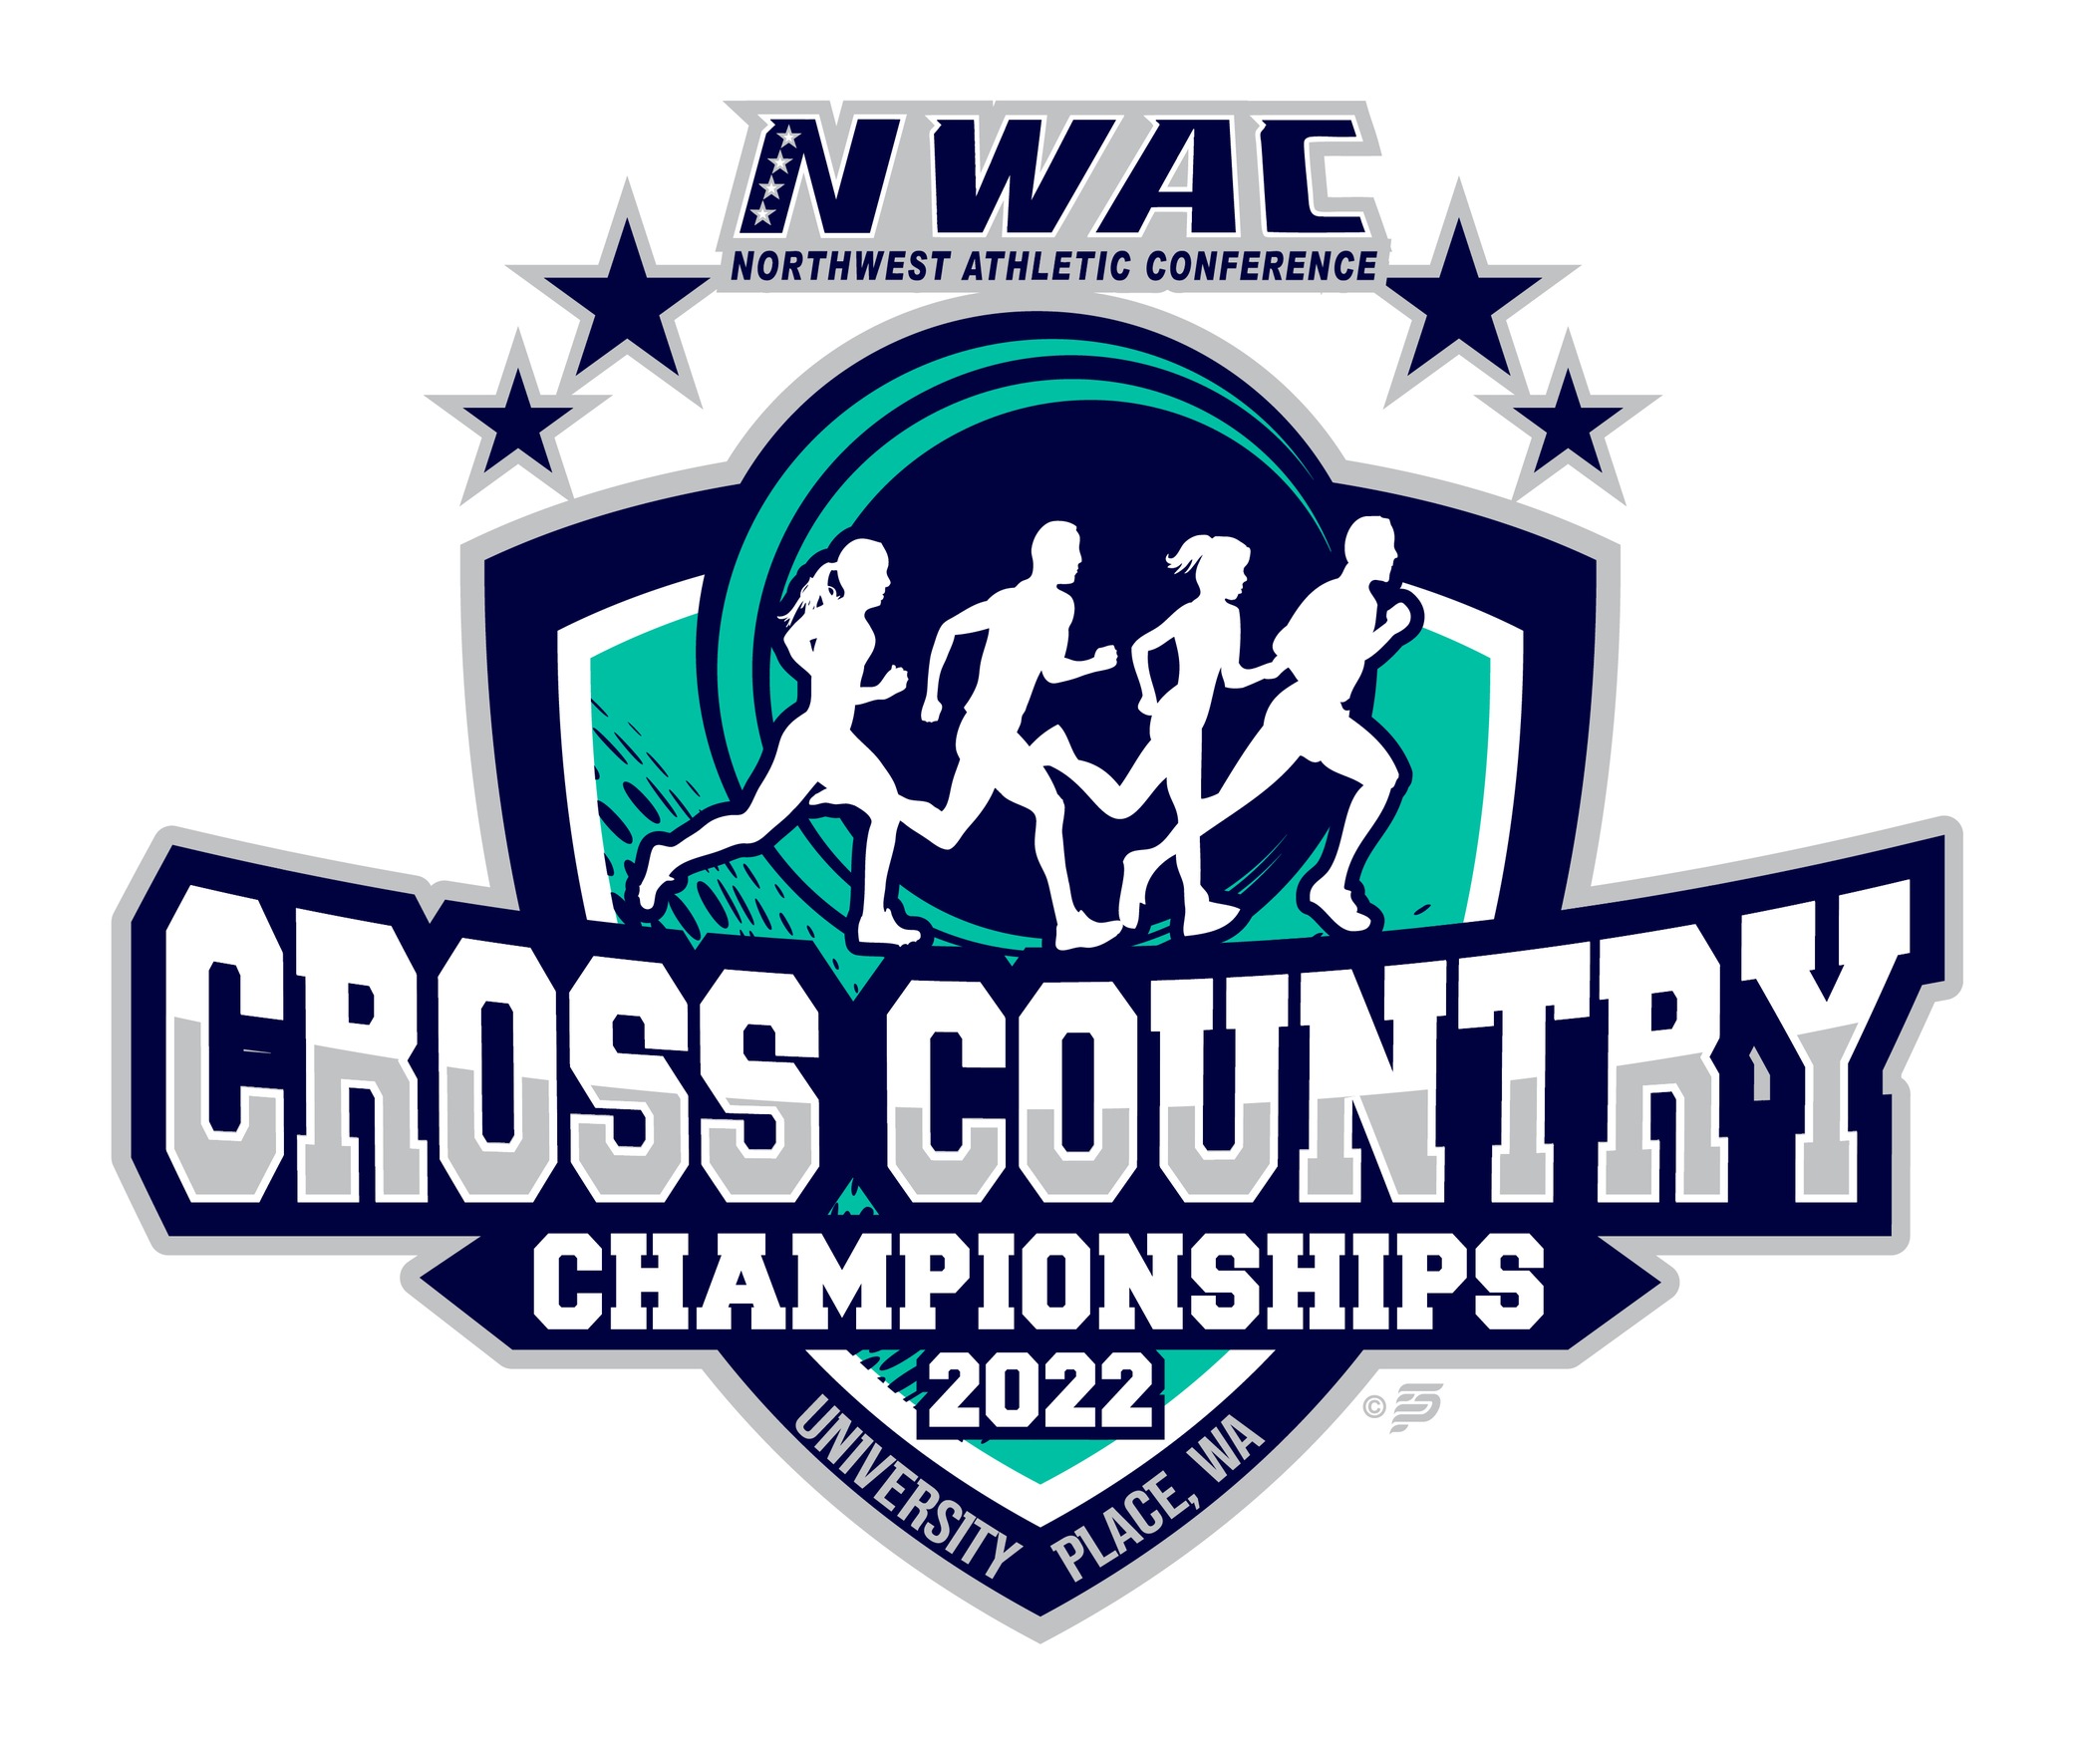 2022 NWAC Cross Country Championships logo